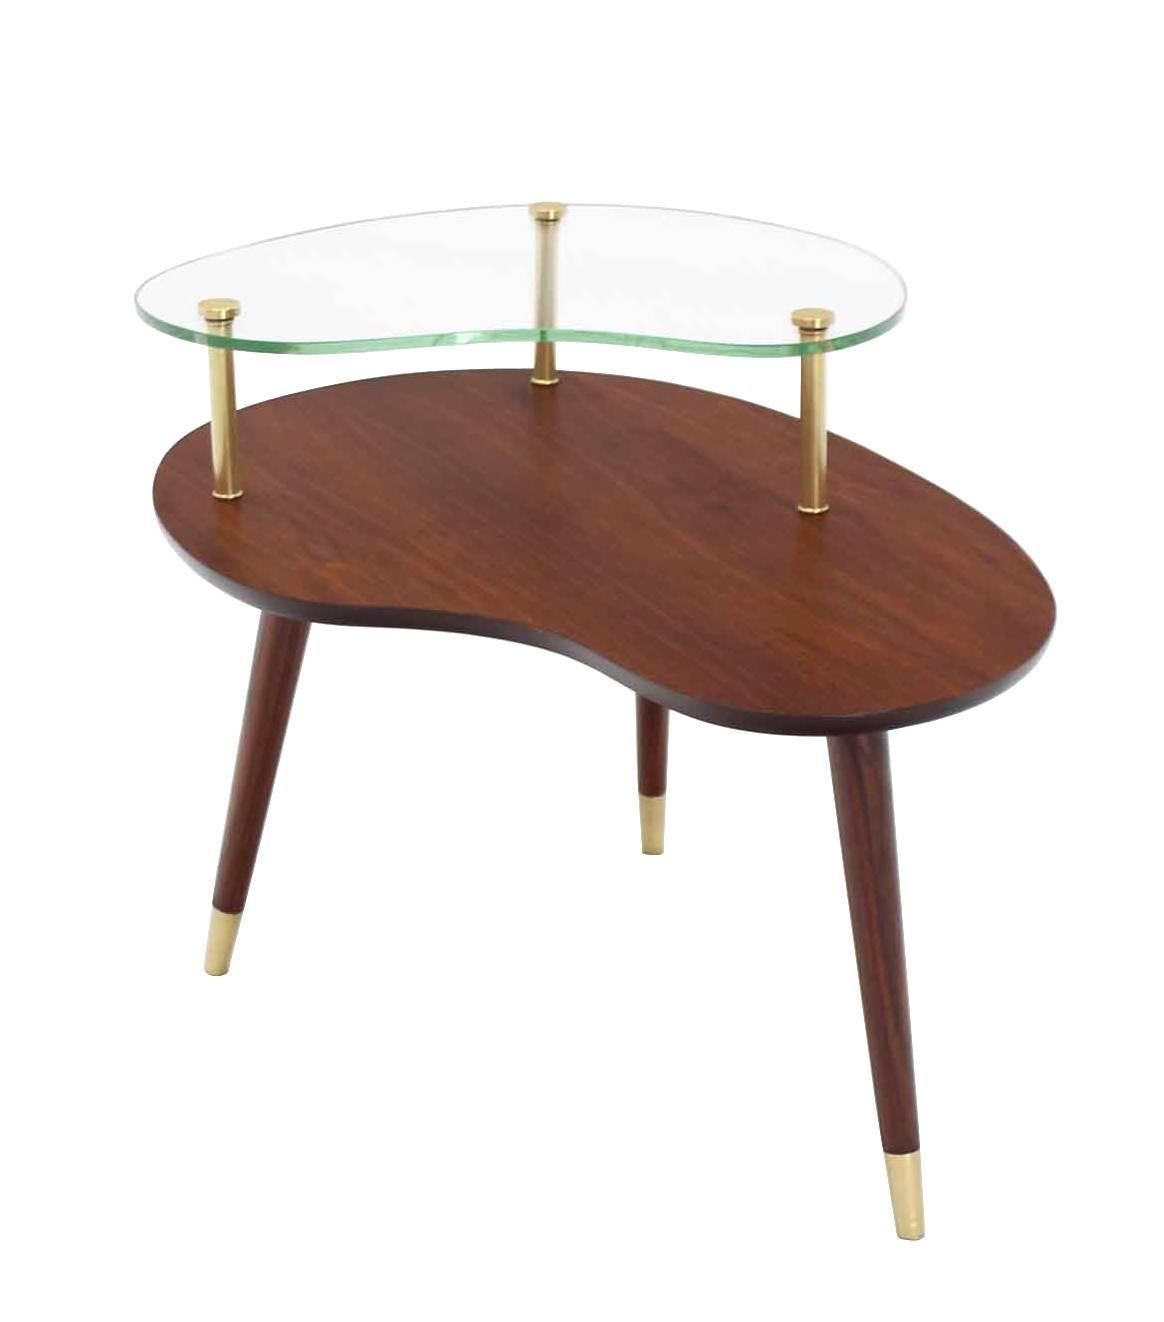 Very nice organic kidney shape Mid-Century Modern side table.